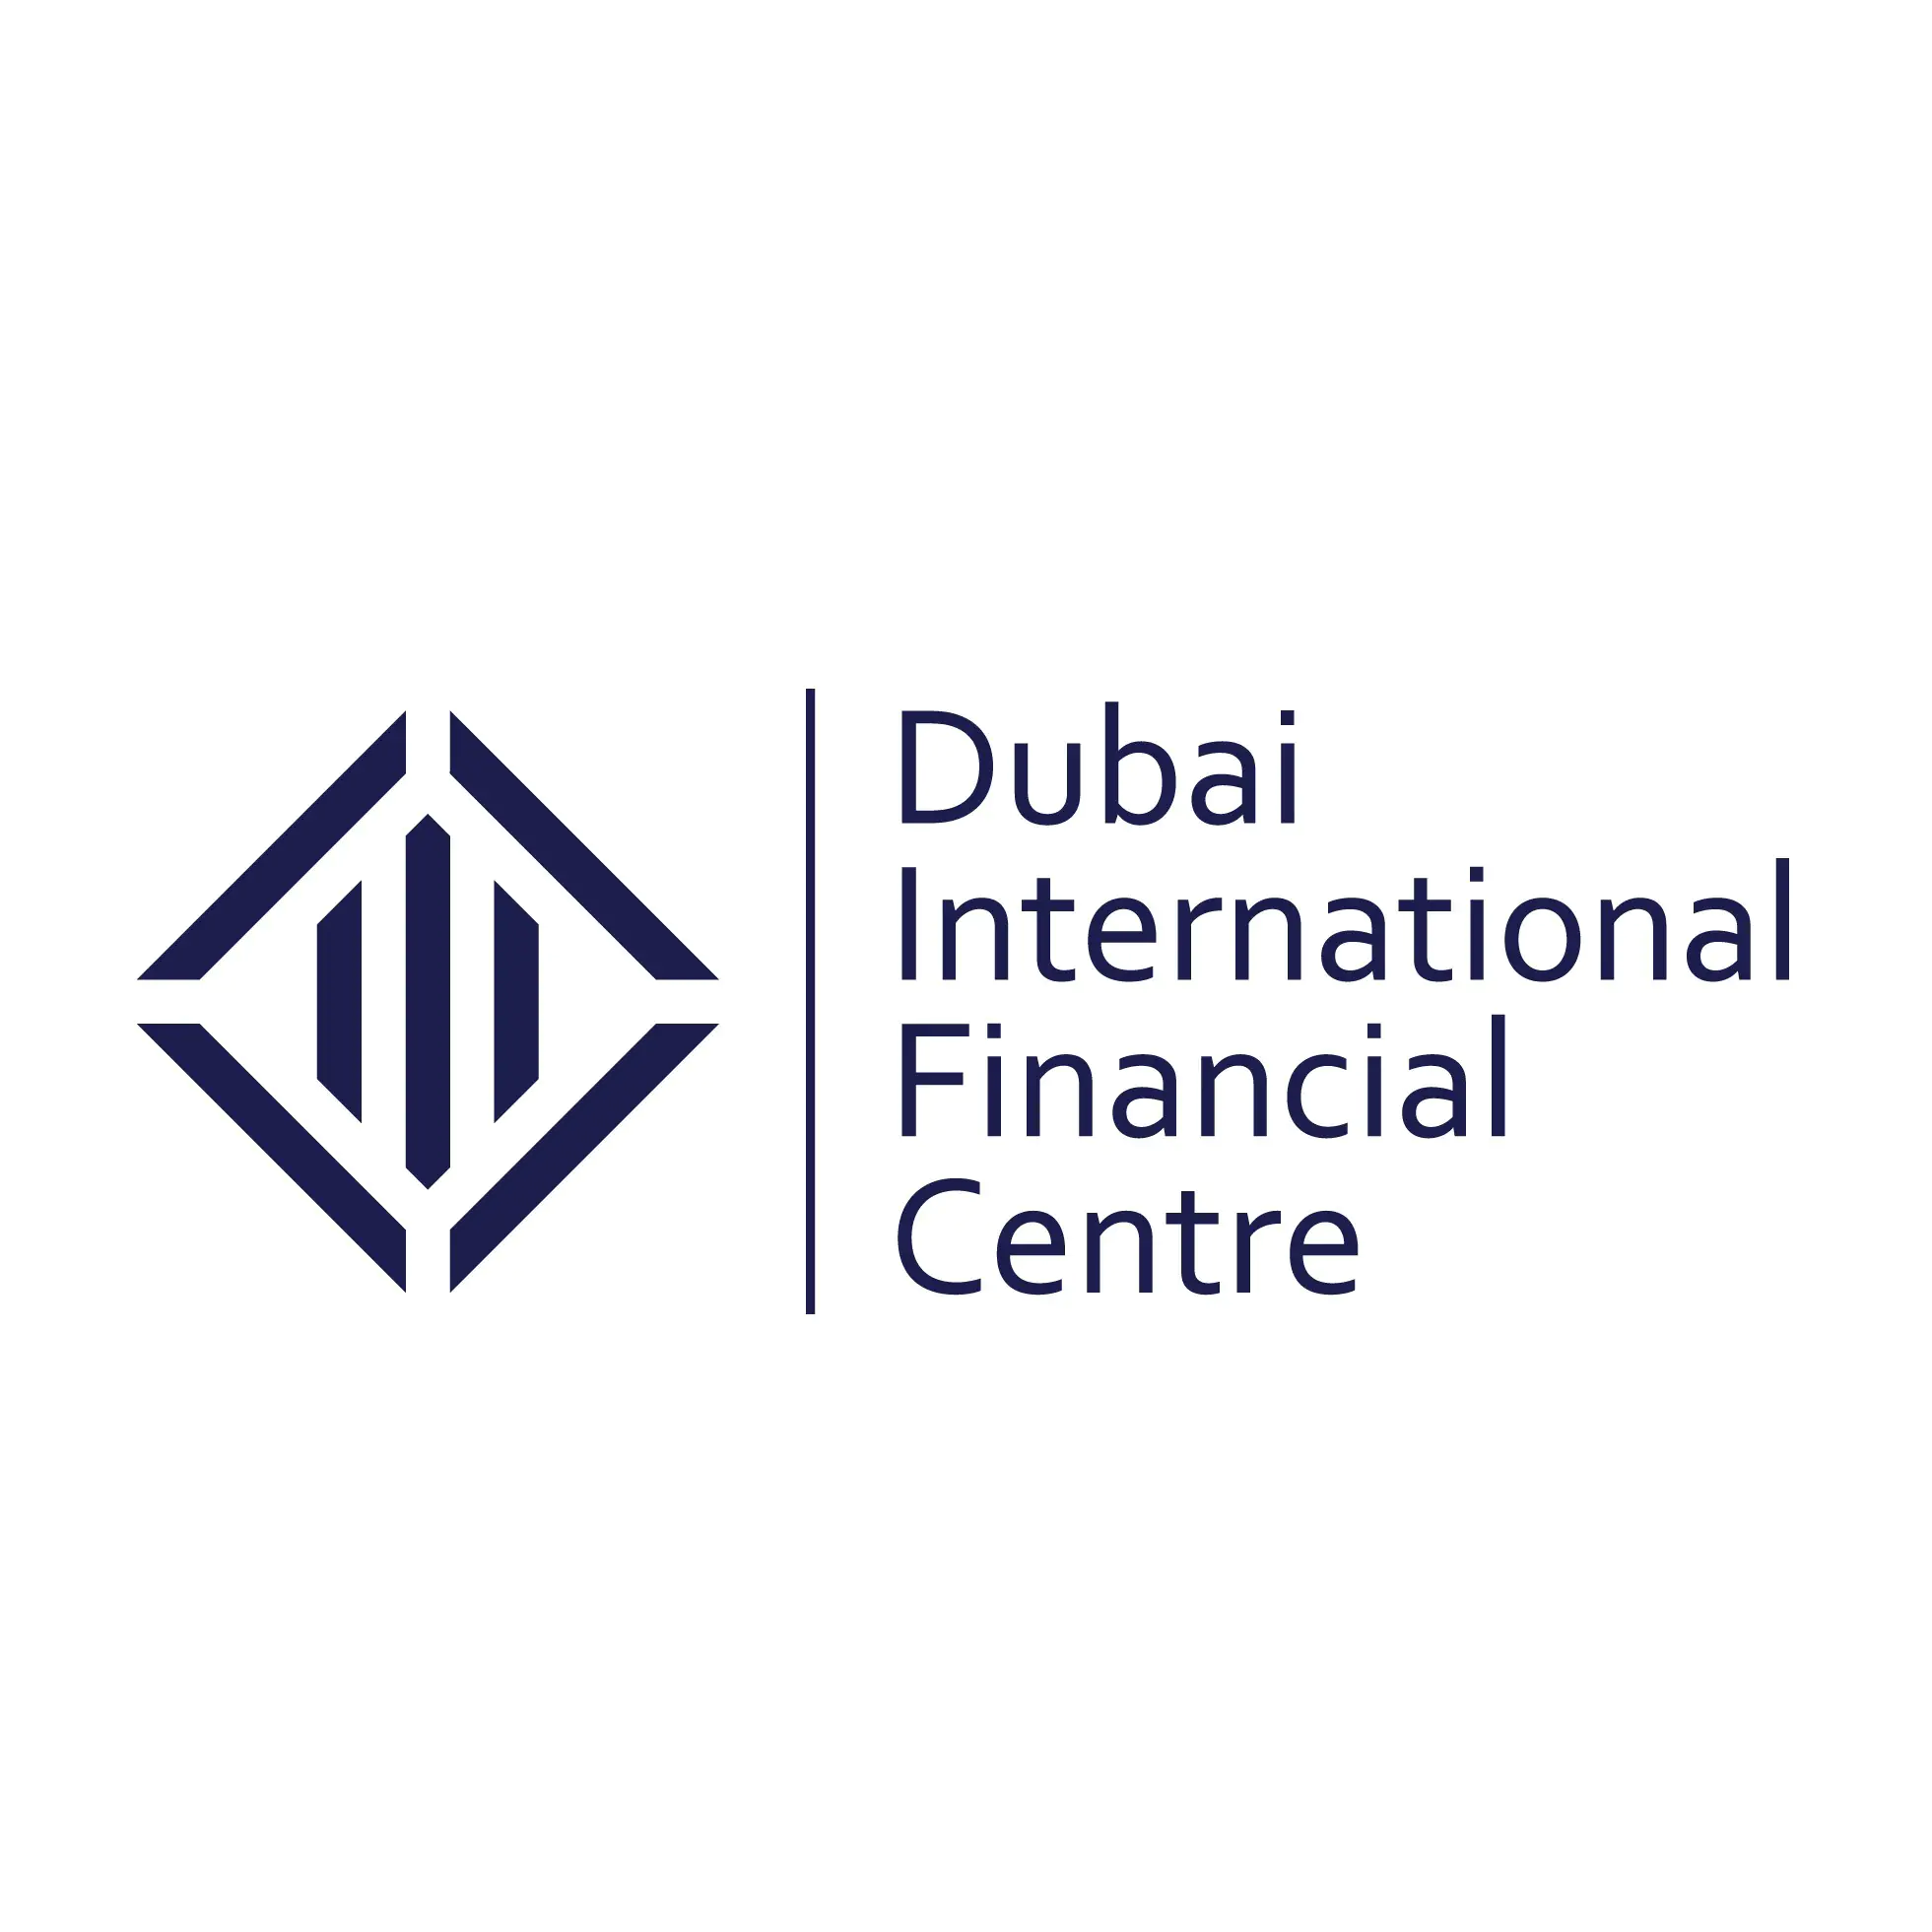 Dubai International Financial Centre - Coming Soon in UAE